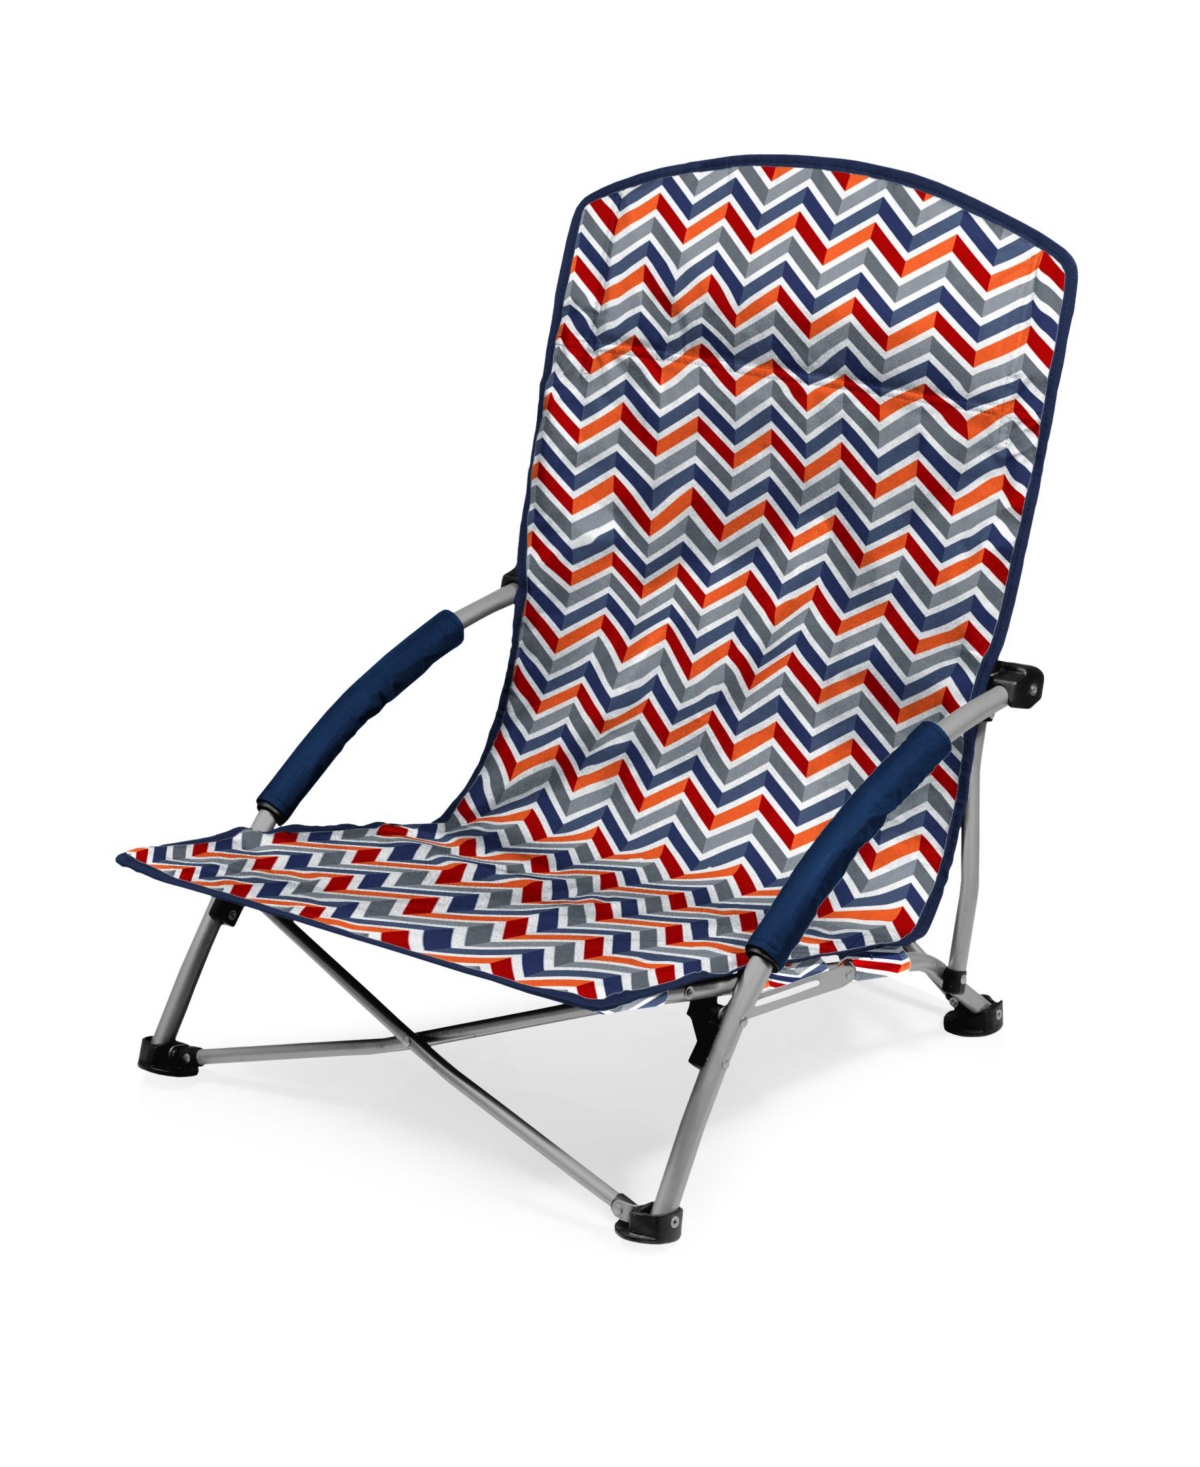 Aloha Tranquility Portable Beach Chair - Navy